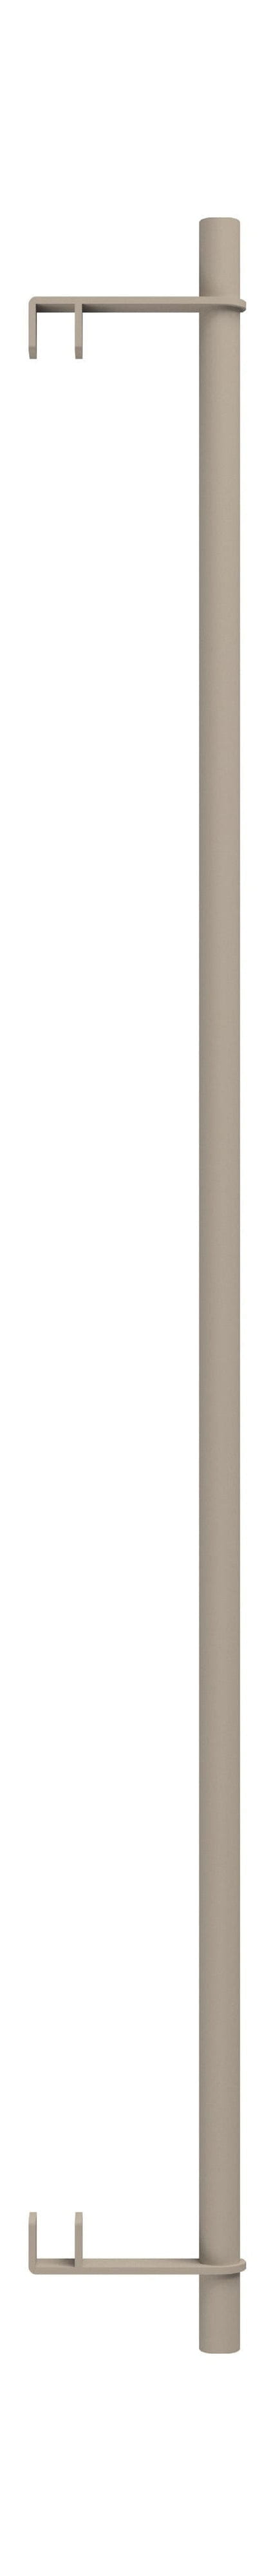 Moebe Sheveling System/Wall Sheveling Clothes Bar 85 cm, Hot Grey